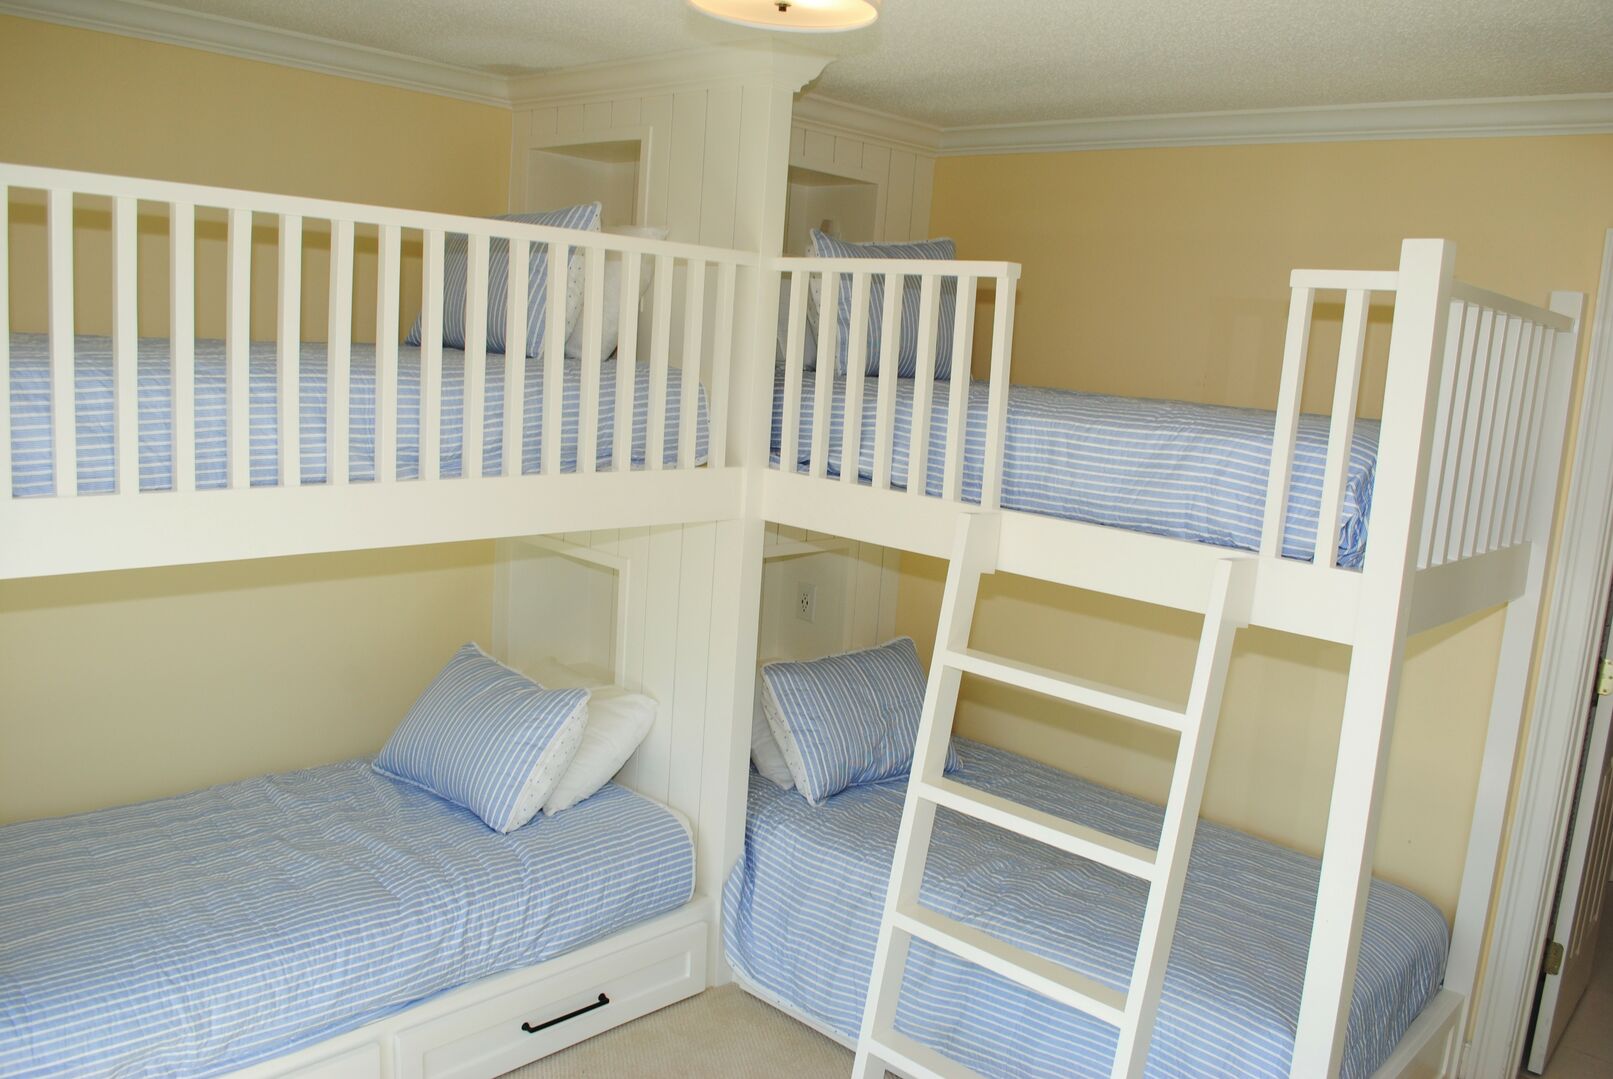 2 Sets of Bunk Beds - Second Floor